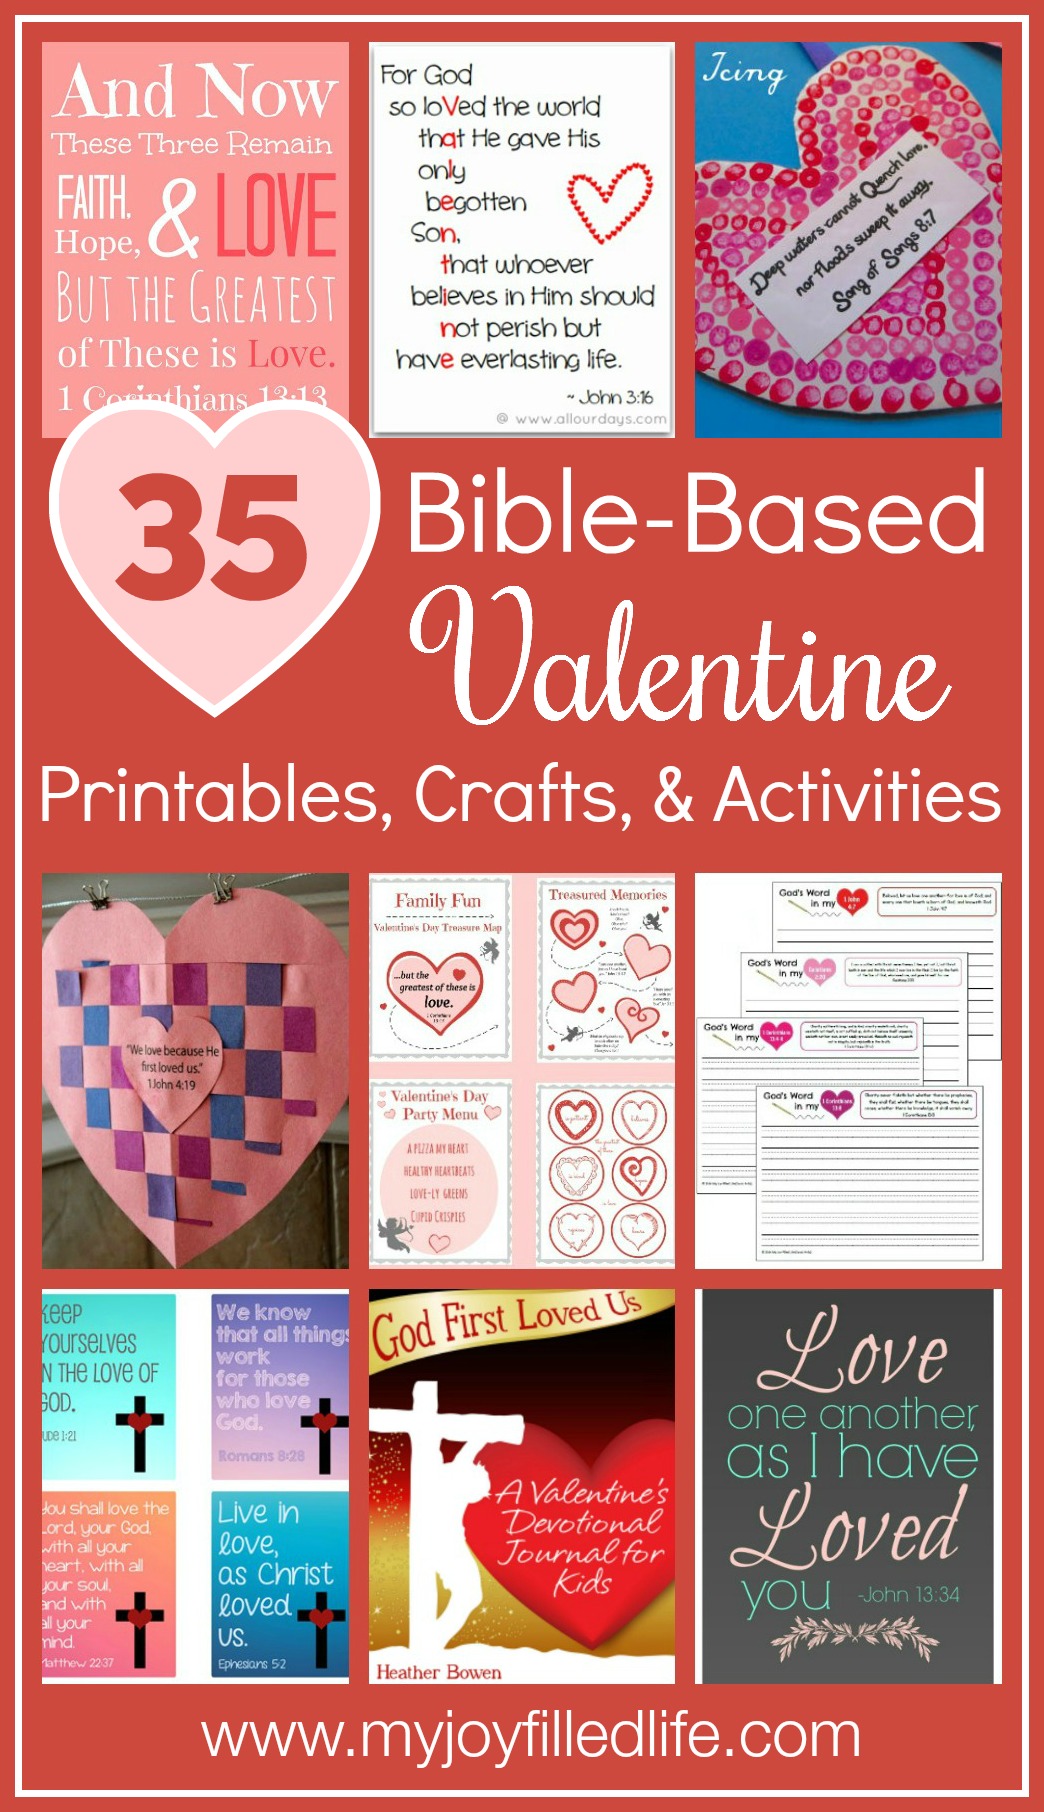 35 Bible-Based Valentine Printables, Crafts, & Activities - My Joy